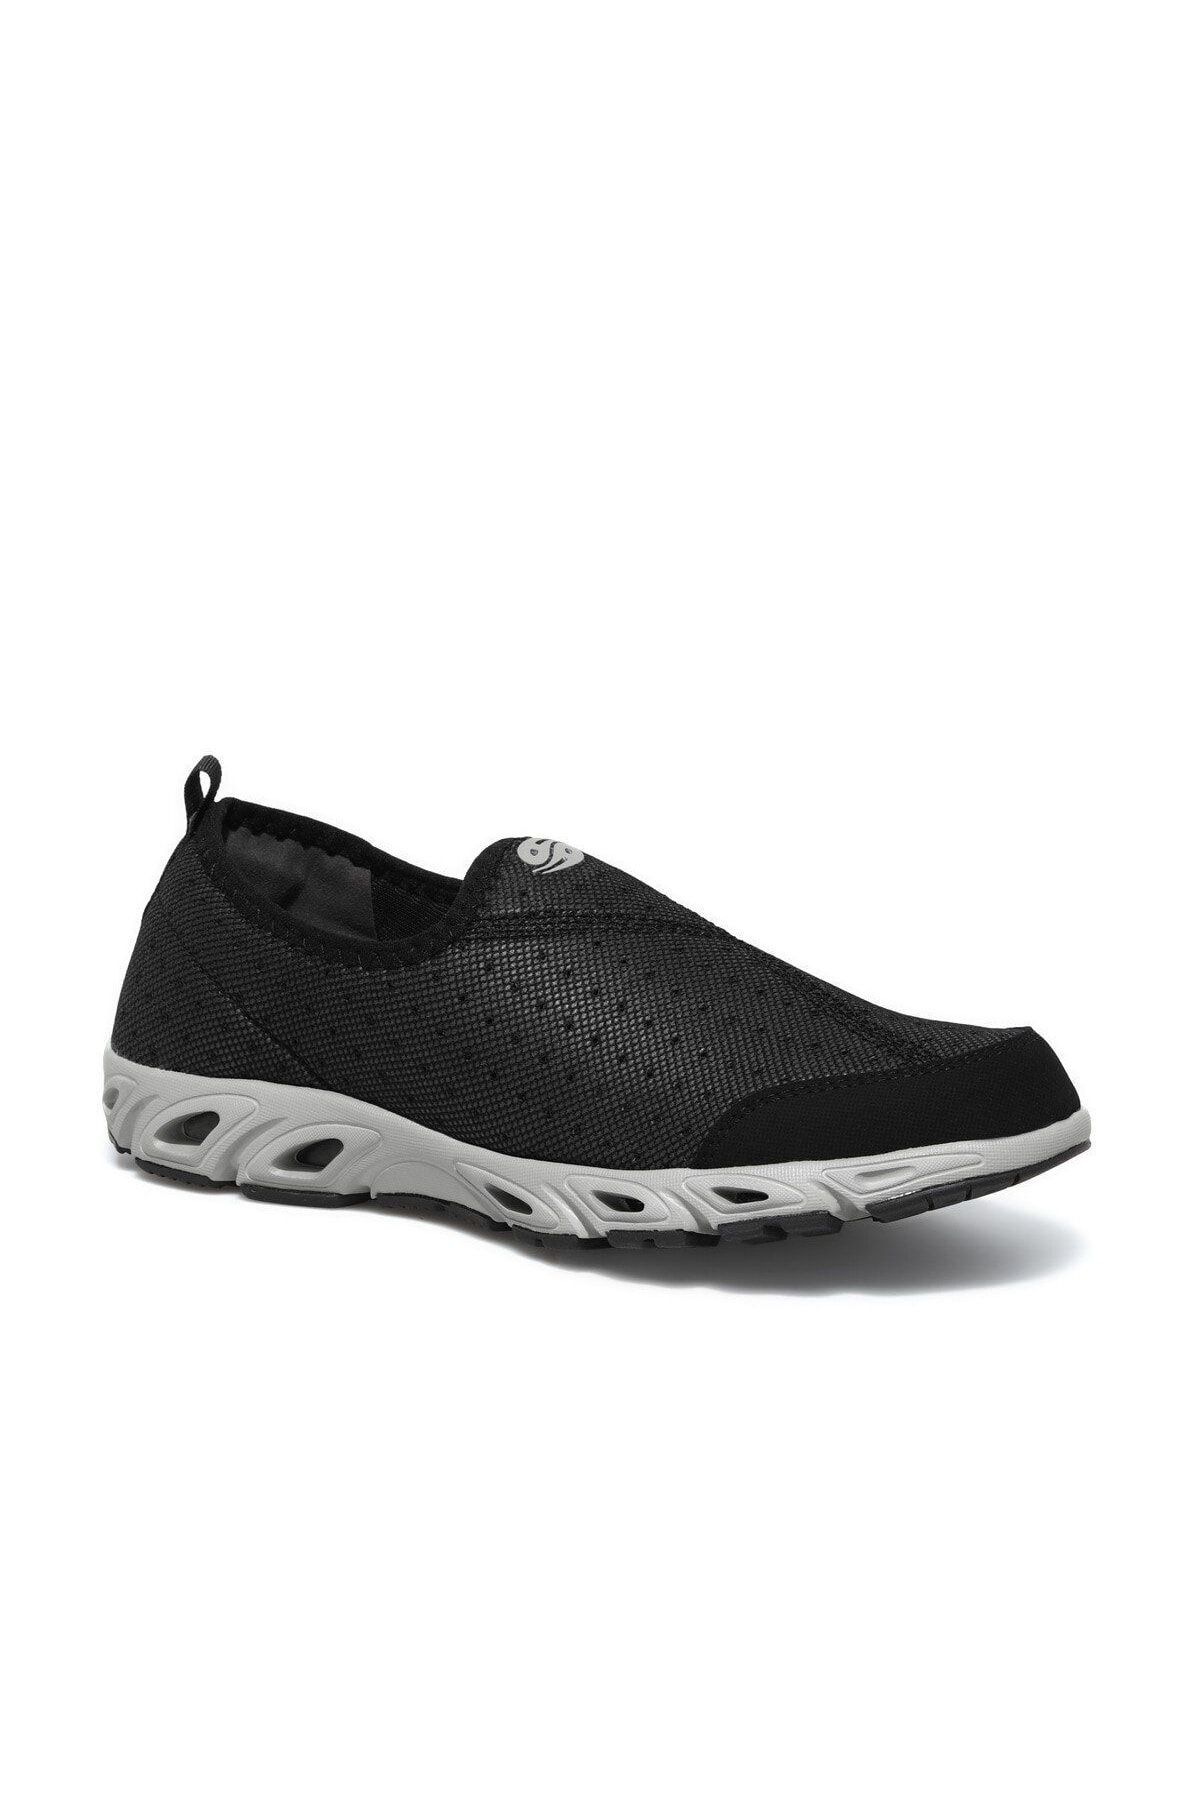 Dockers Siyah Renk Hafif Taban Comfort Erkek Ayakkabı